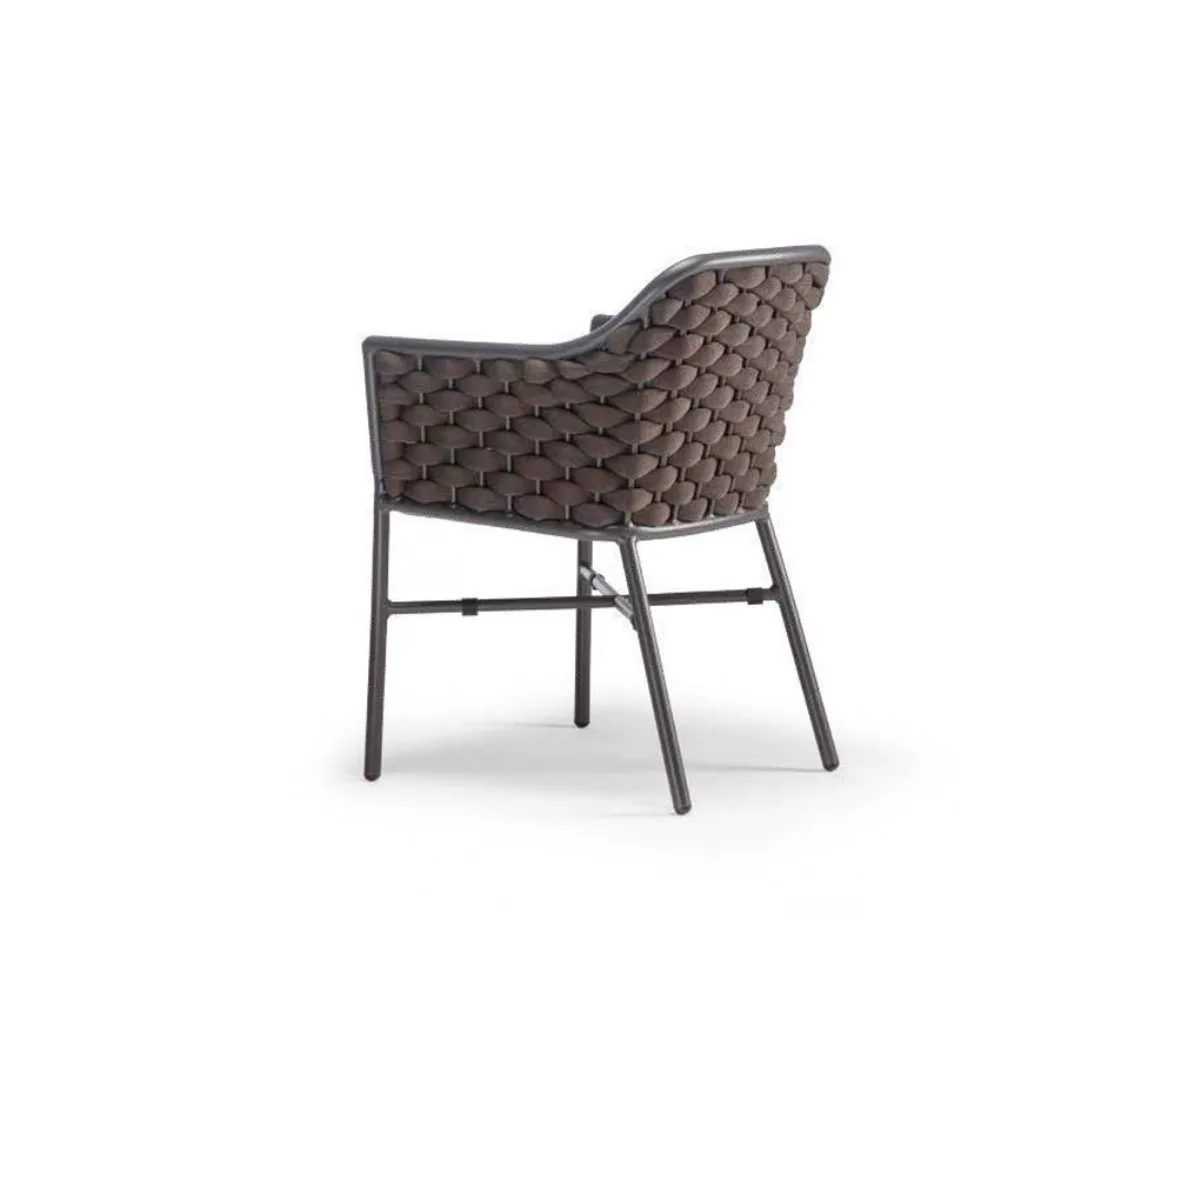 lorenzo armchair 2. Rope Furniture